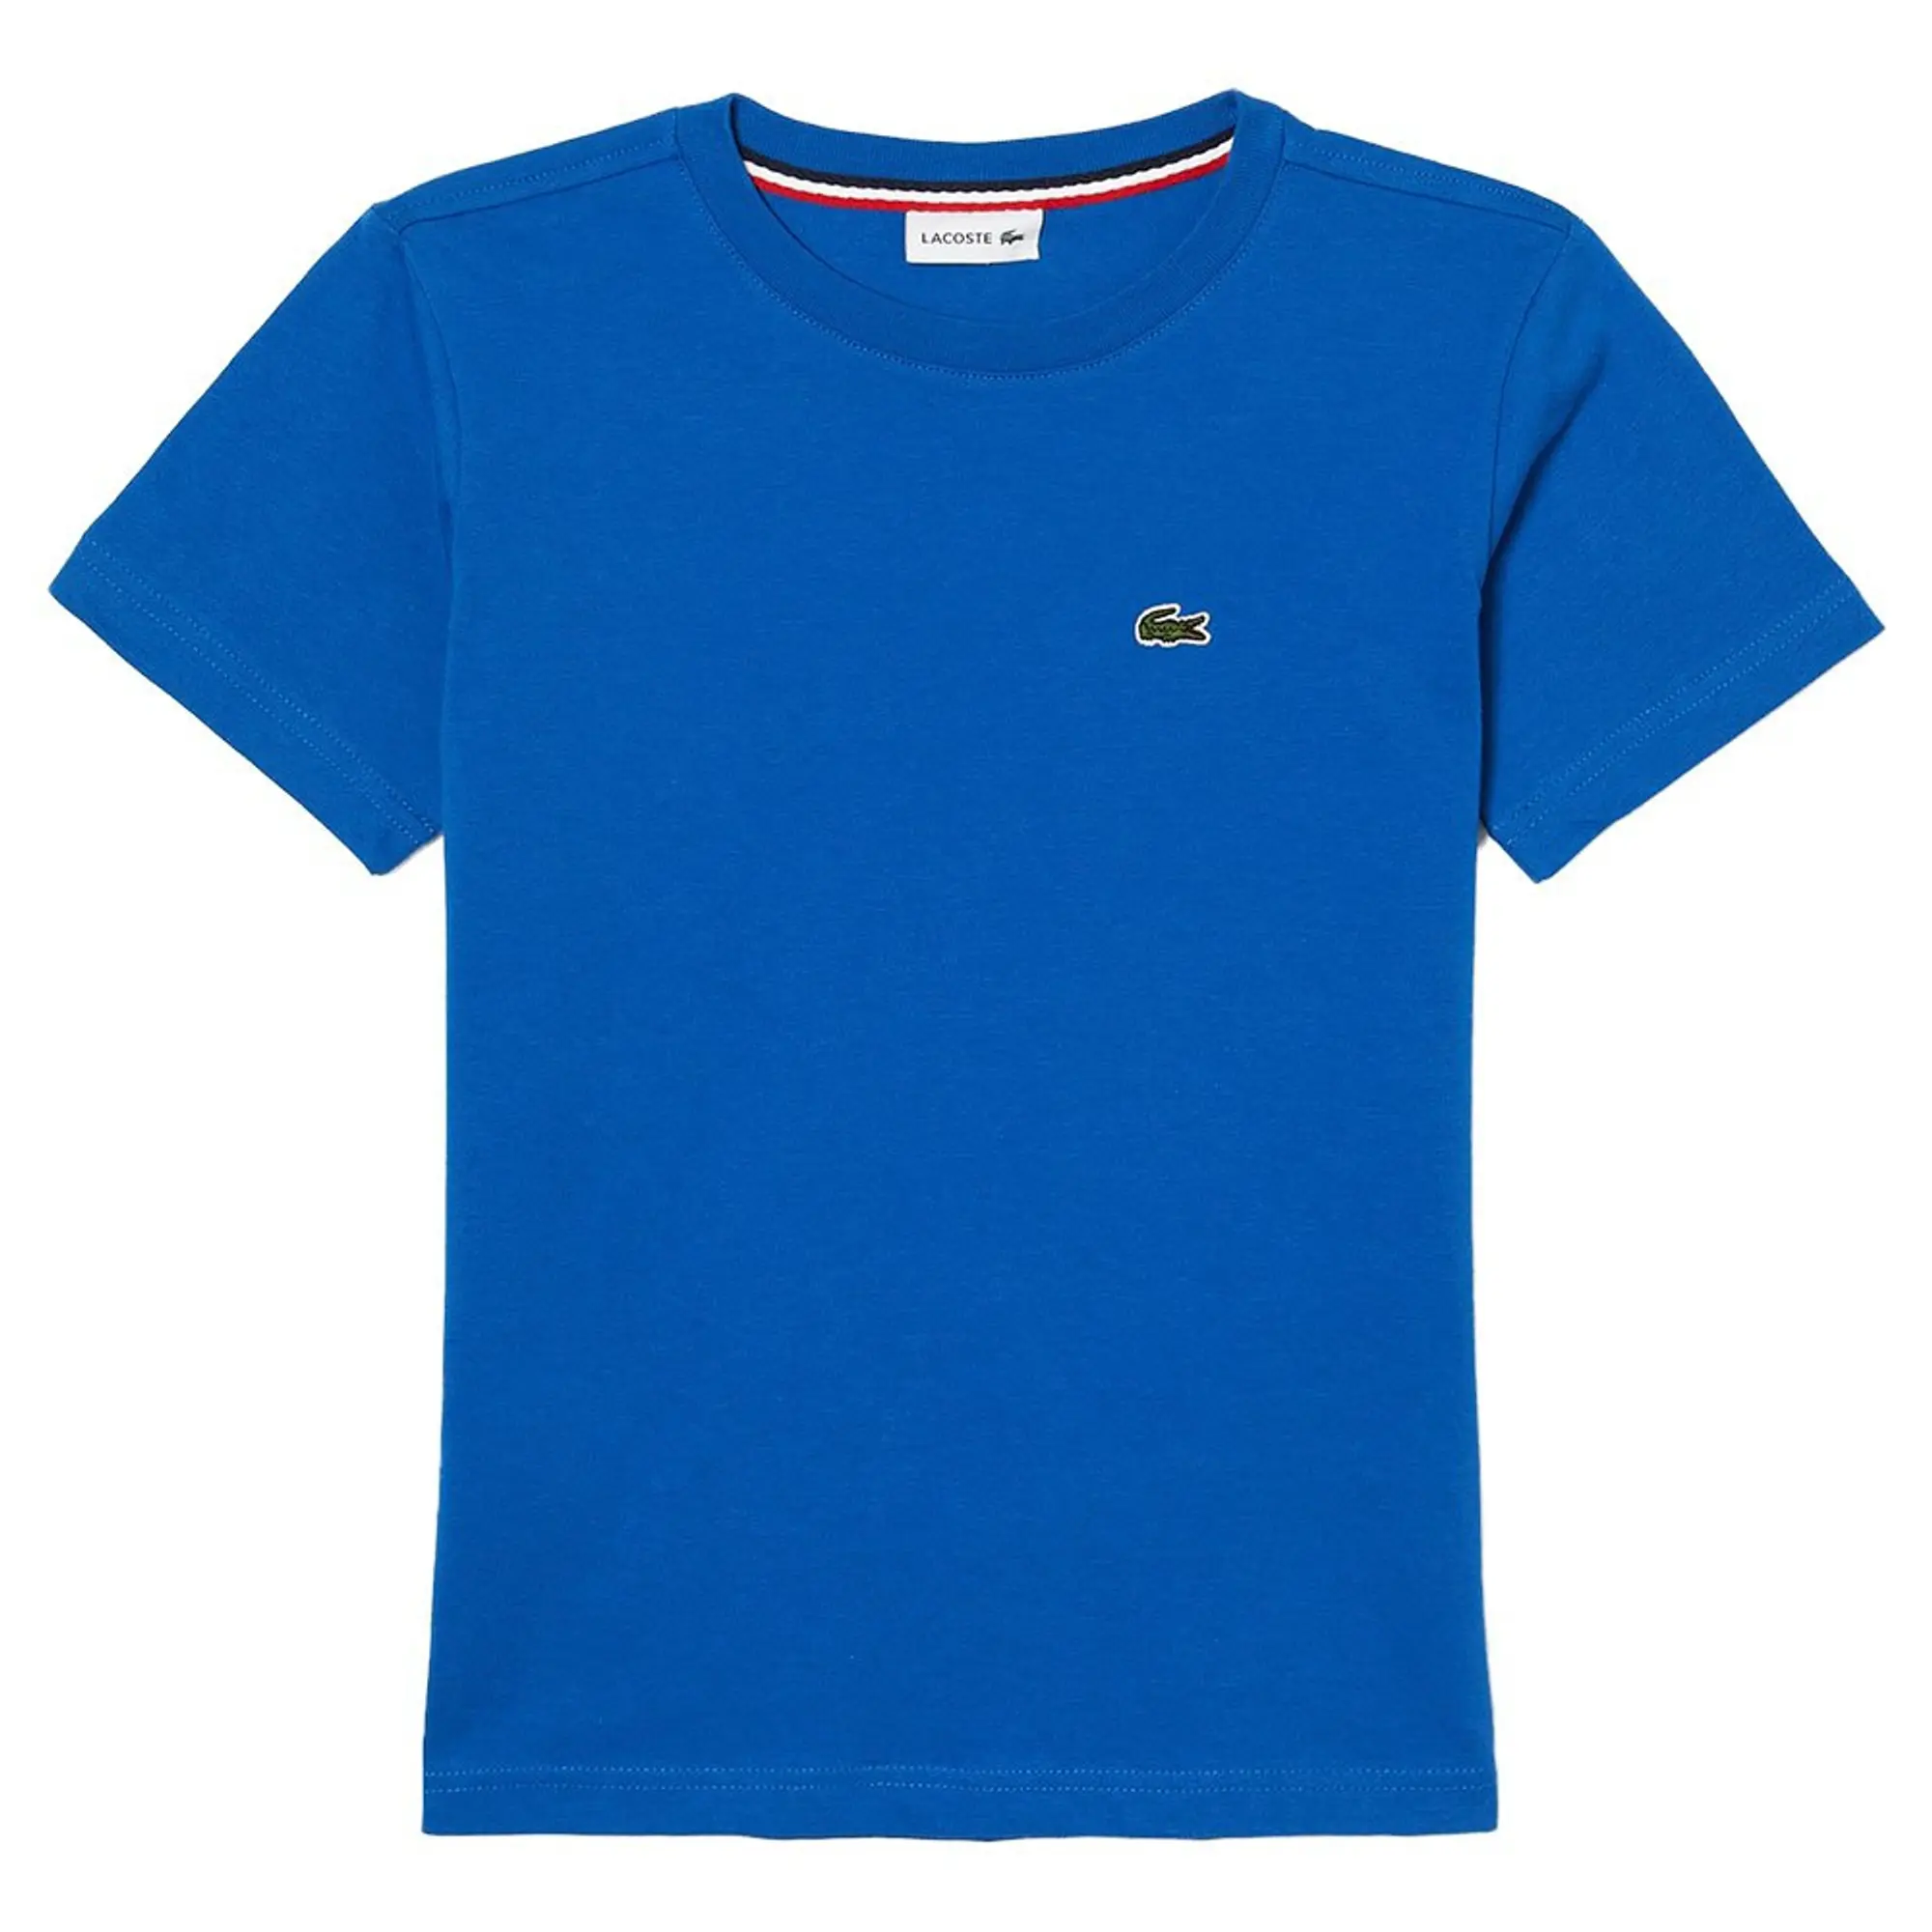 Lacoste Boys Classic Short Sleeve T-shirt - Kingdom Blue, Blue